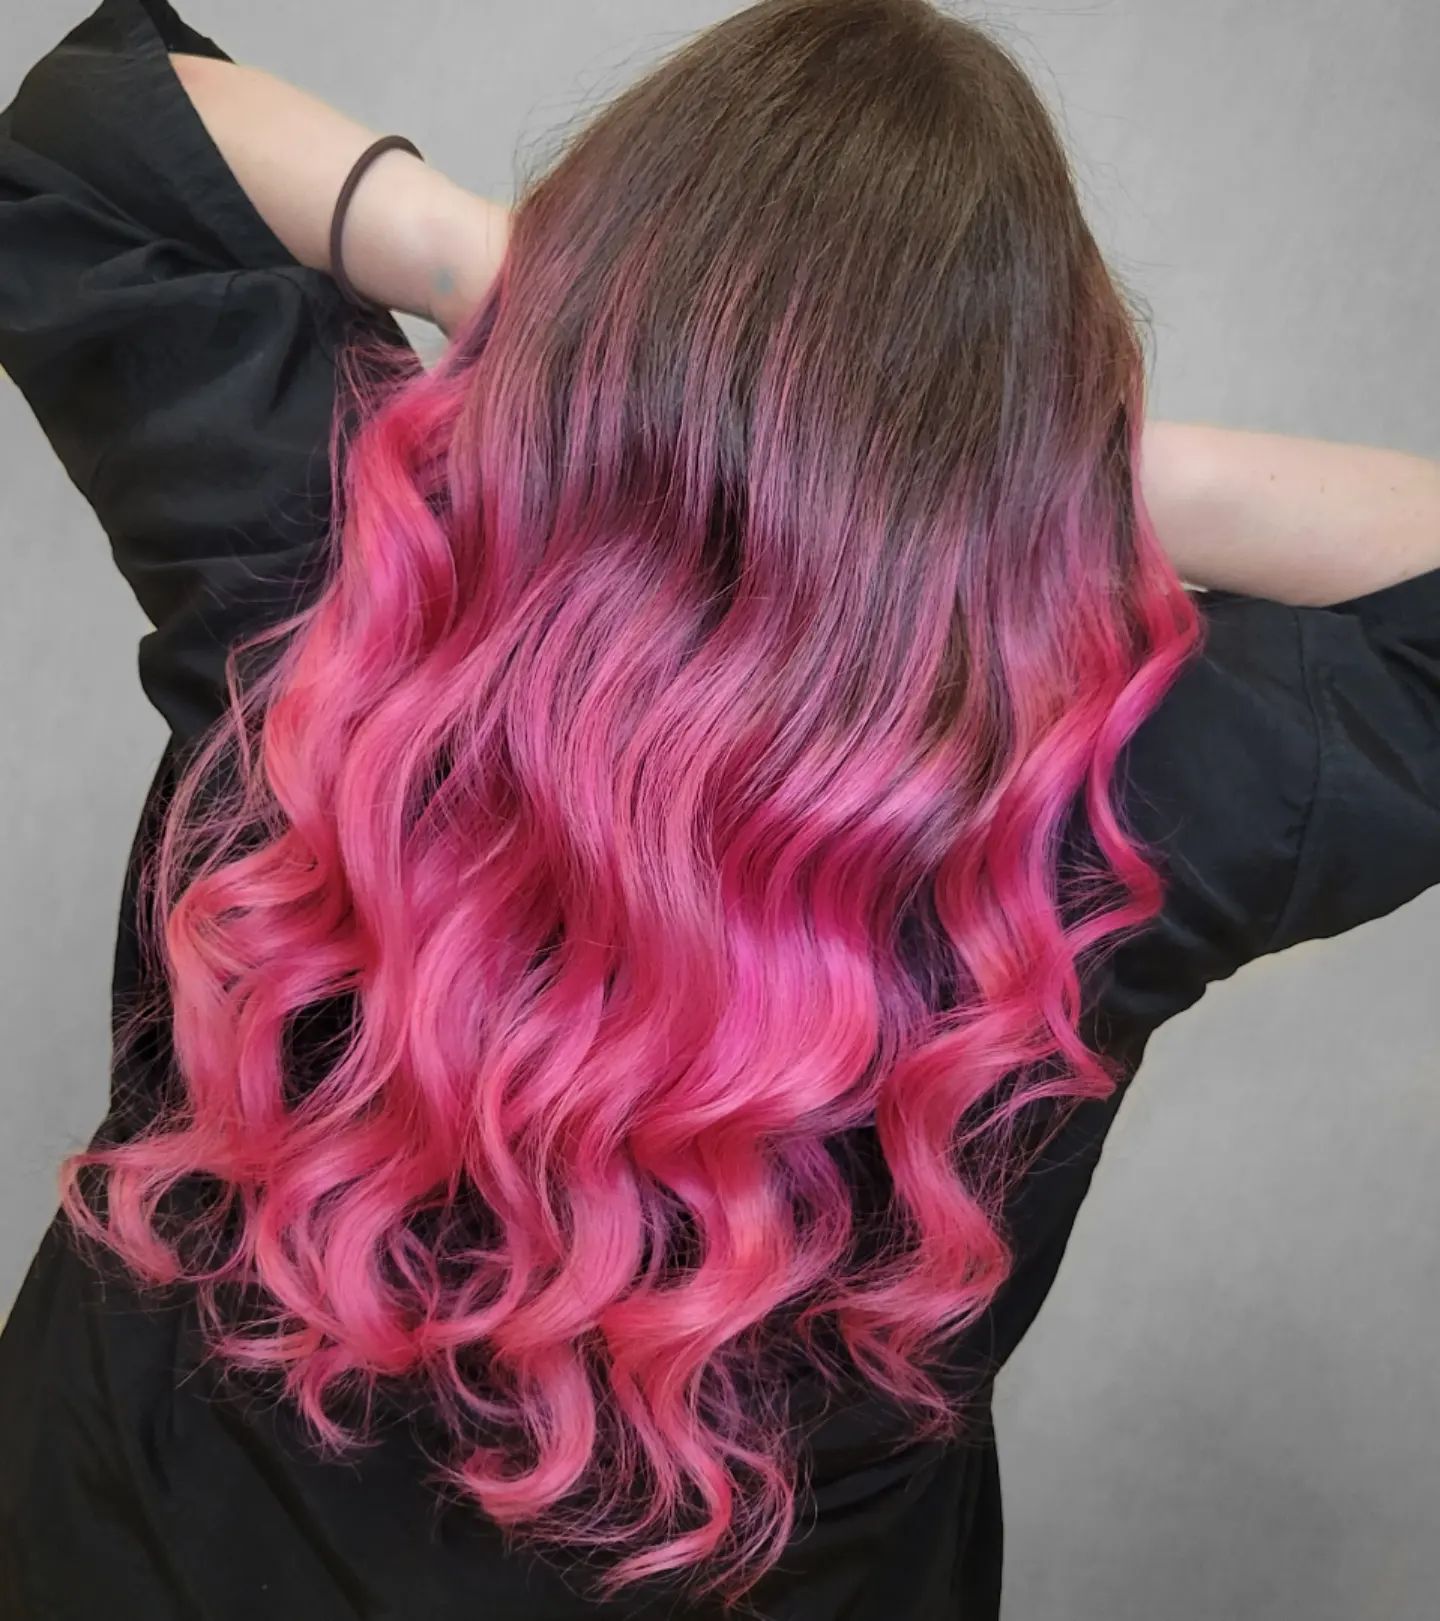 275848115 935385073839870 4052236138876418865 n - Ombré hair rosa: 60 inspirações, trends